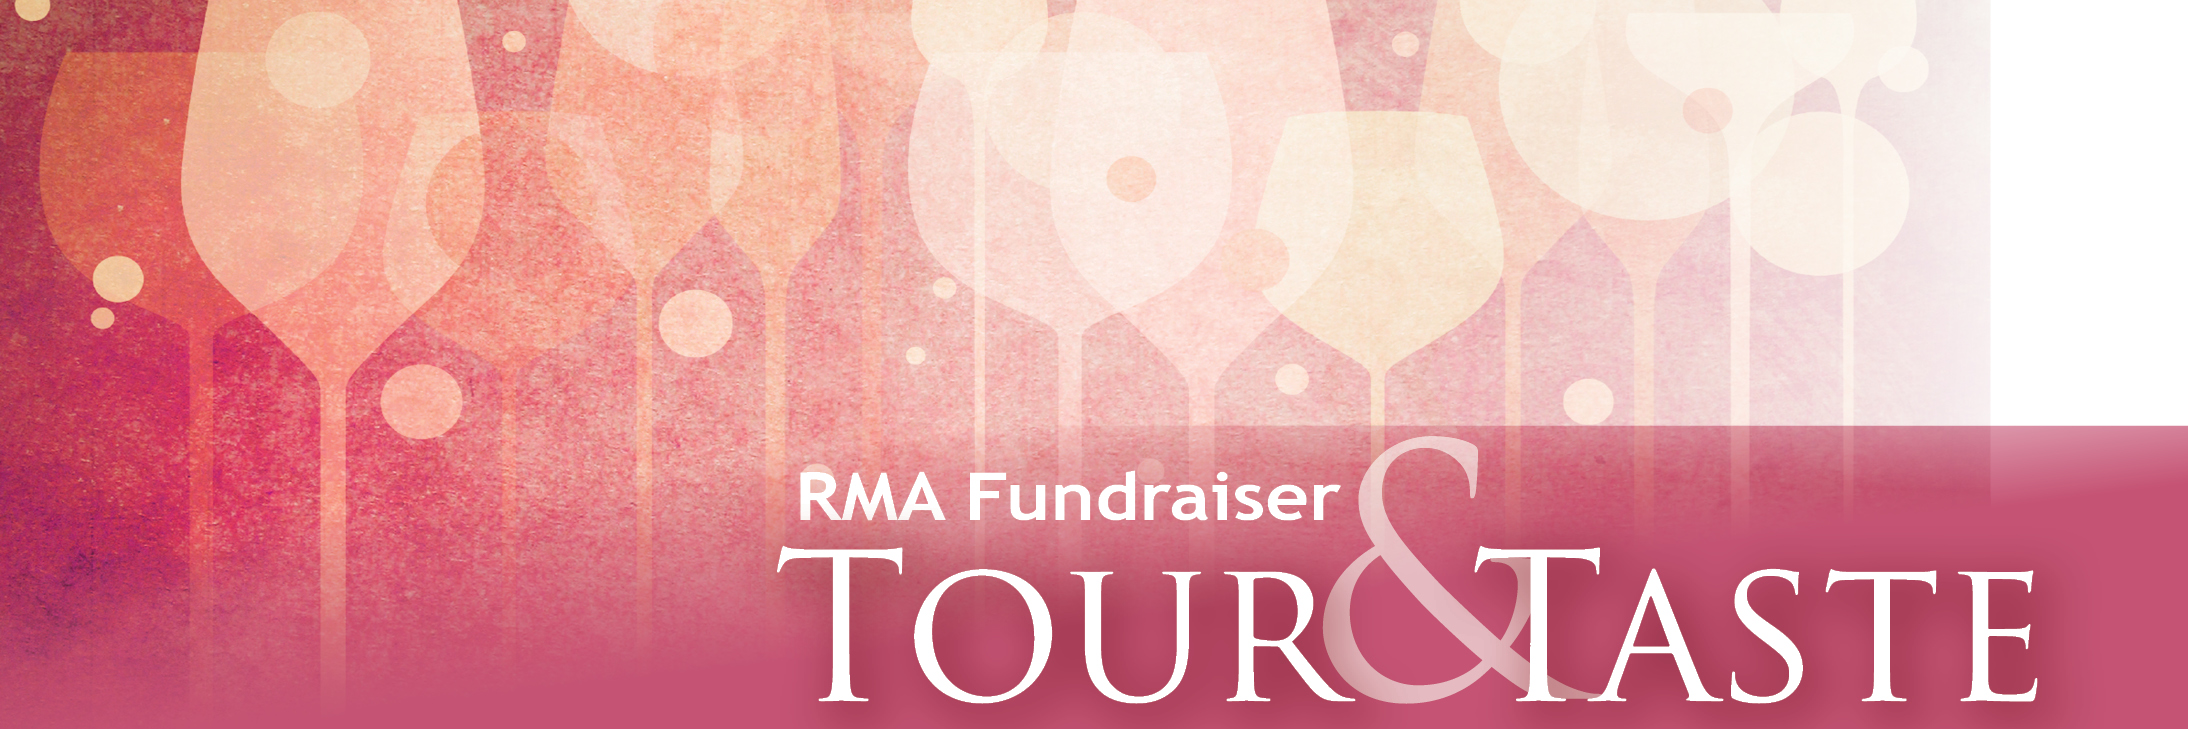 Tour and Taste RMA Fundraiser February 9